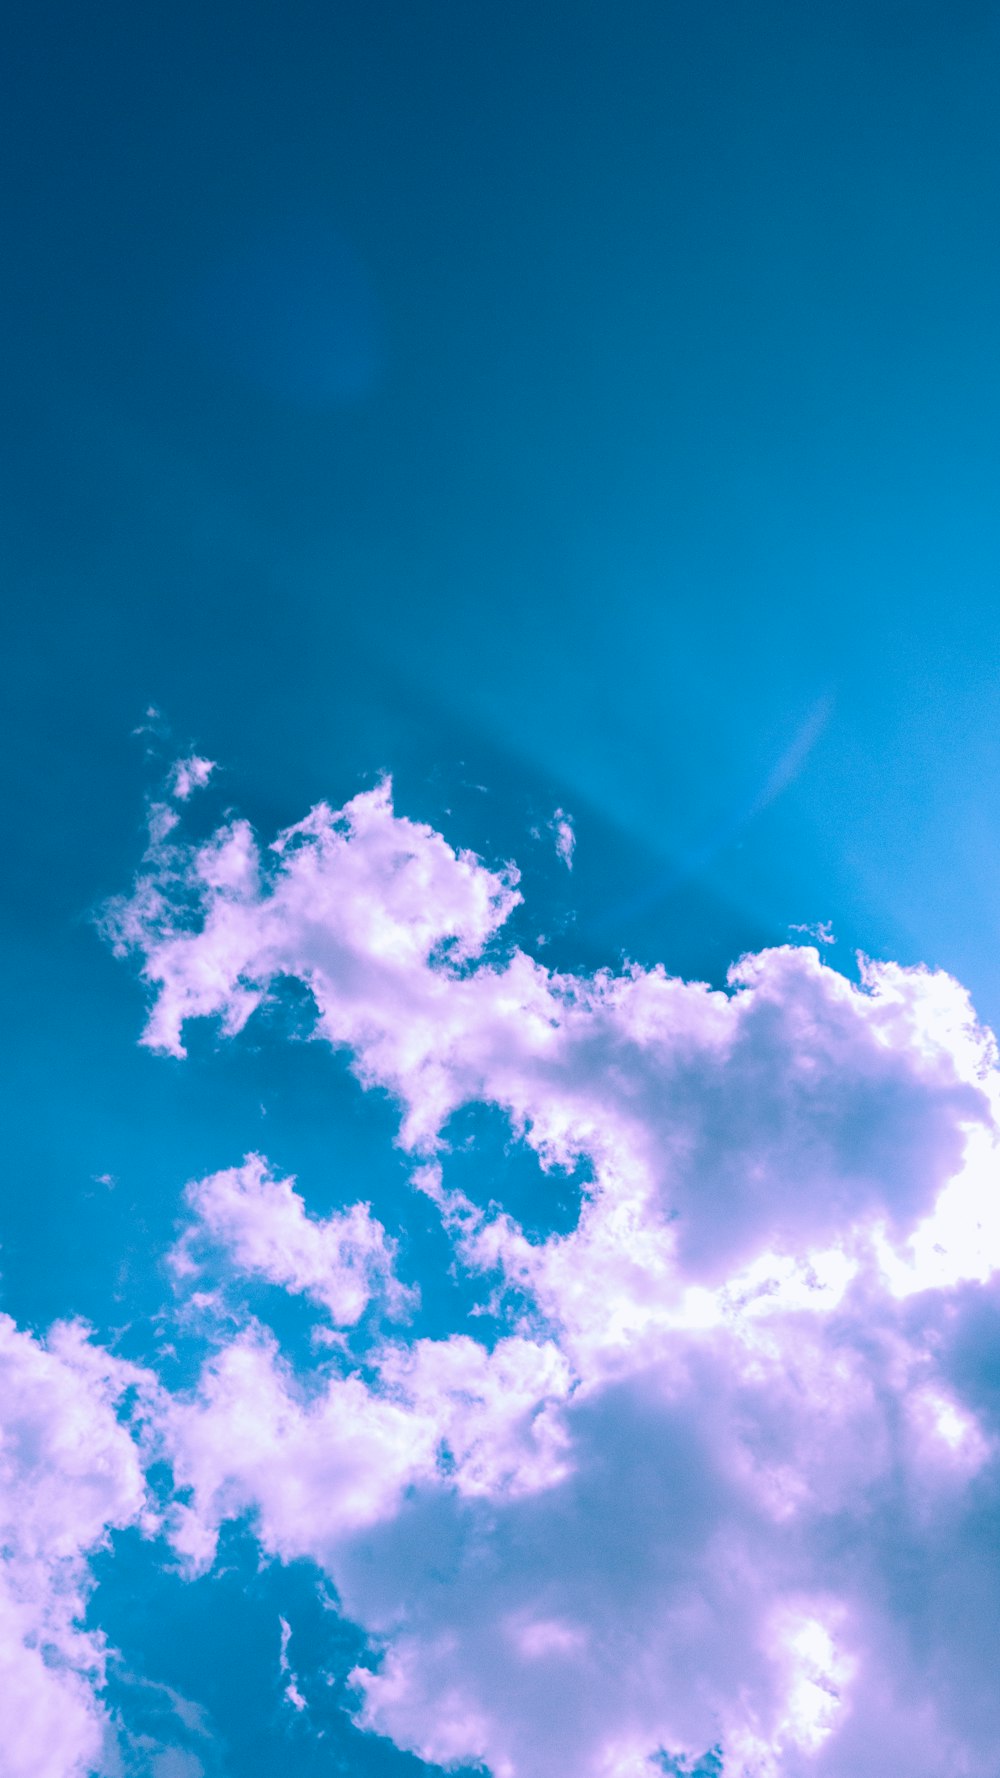 Un avión volando a través de un cielo azul con nubes